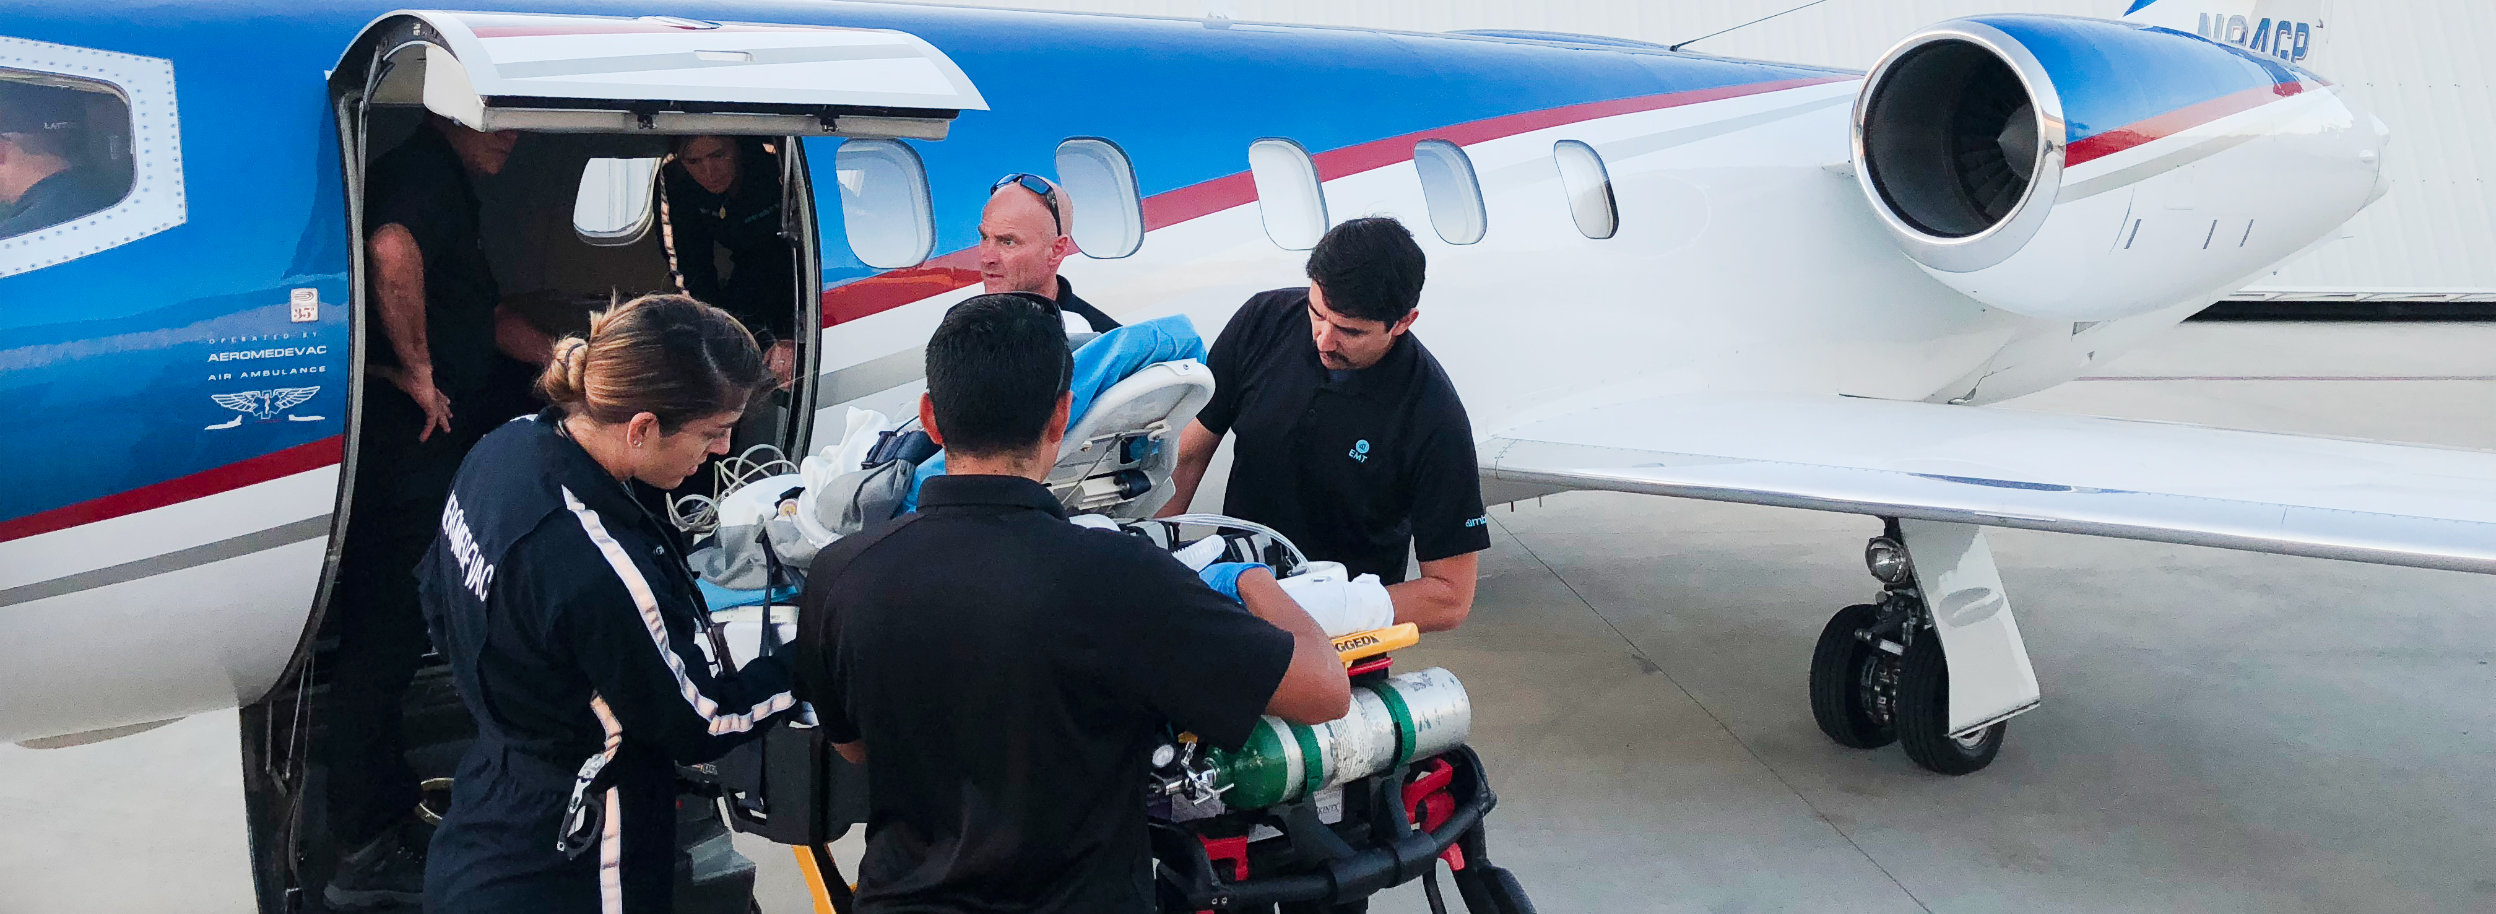 Aeromedevac team preapring a patient for a medical flight